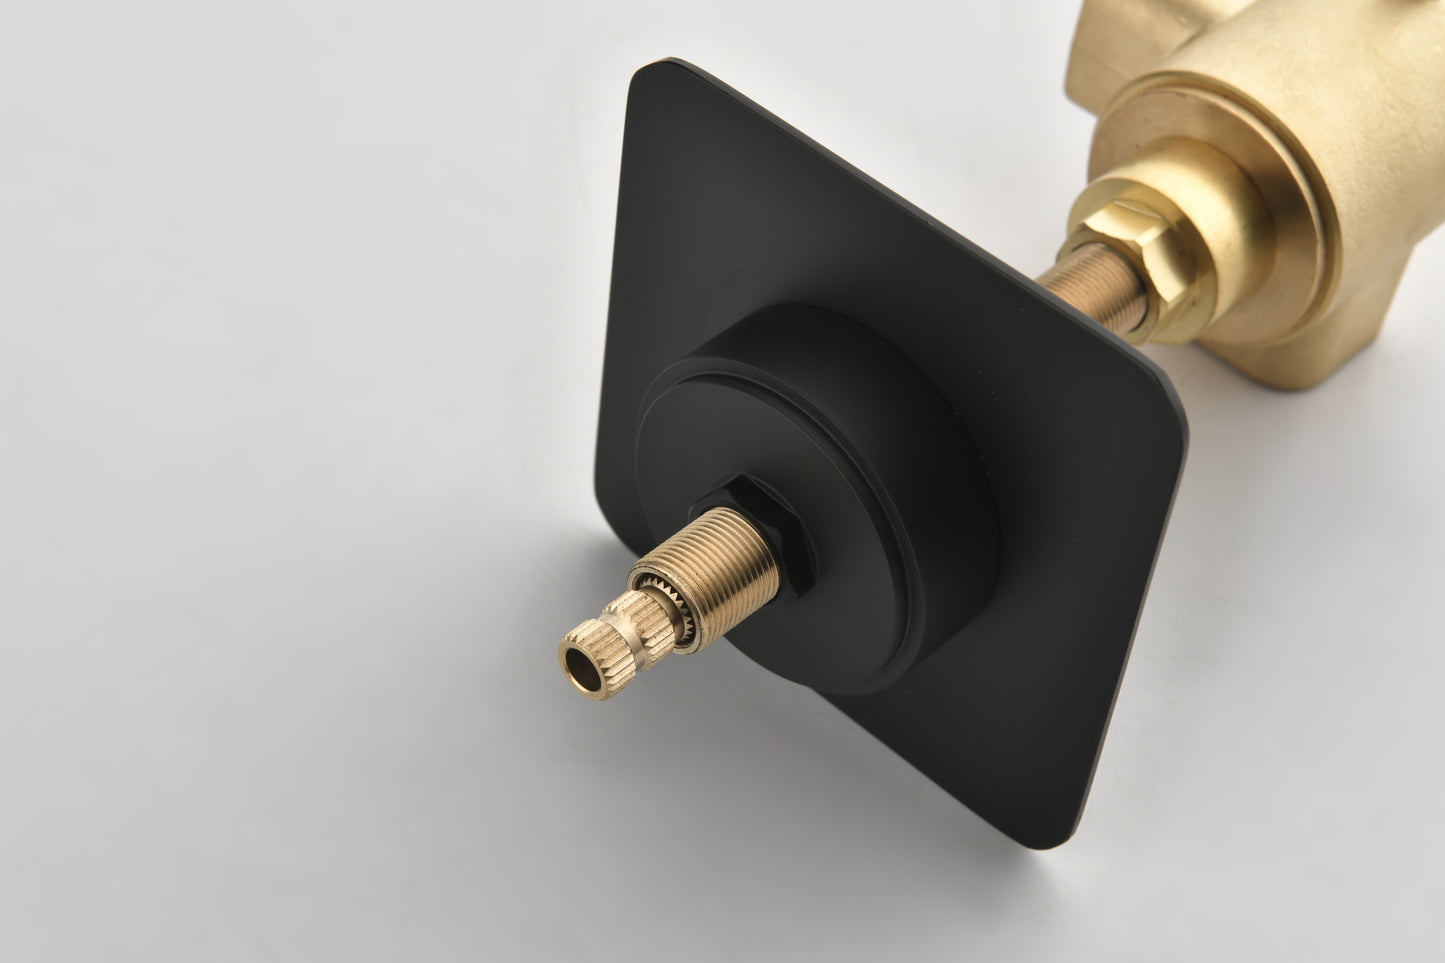 Master Shower Volume Control
Adjustable brass handle valve body, 1 piece